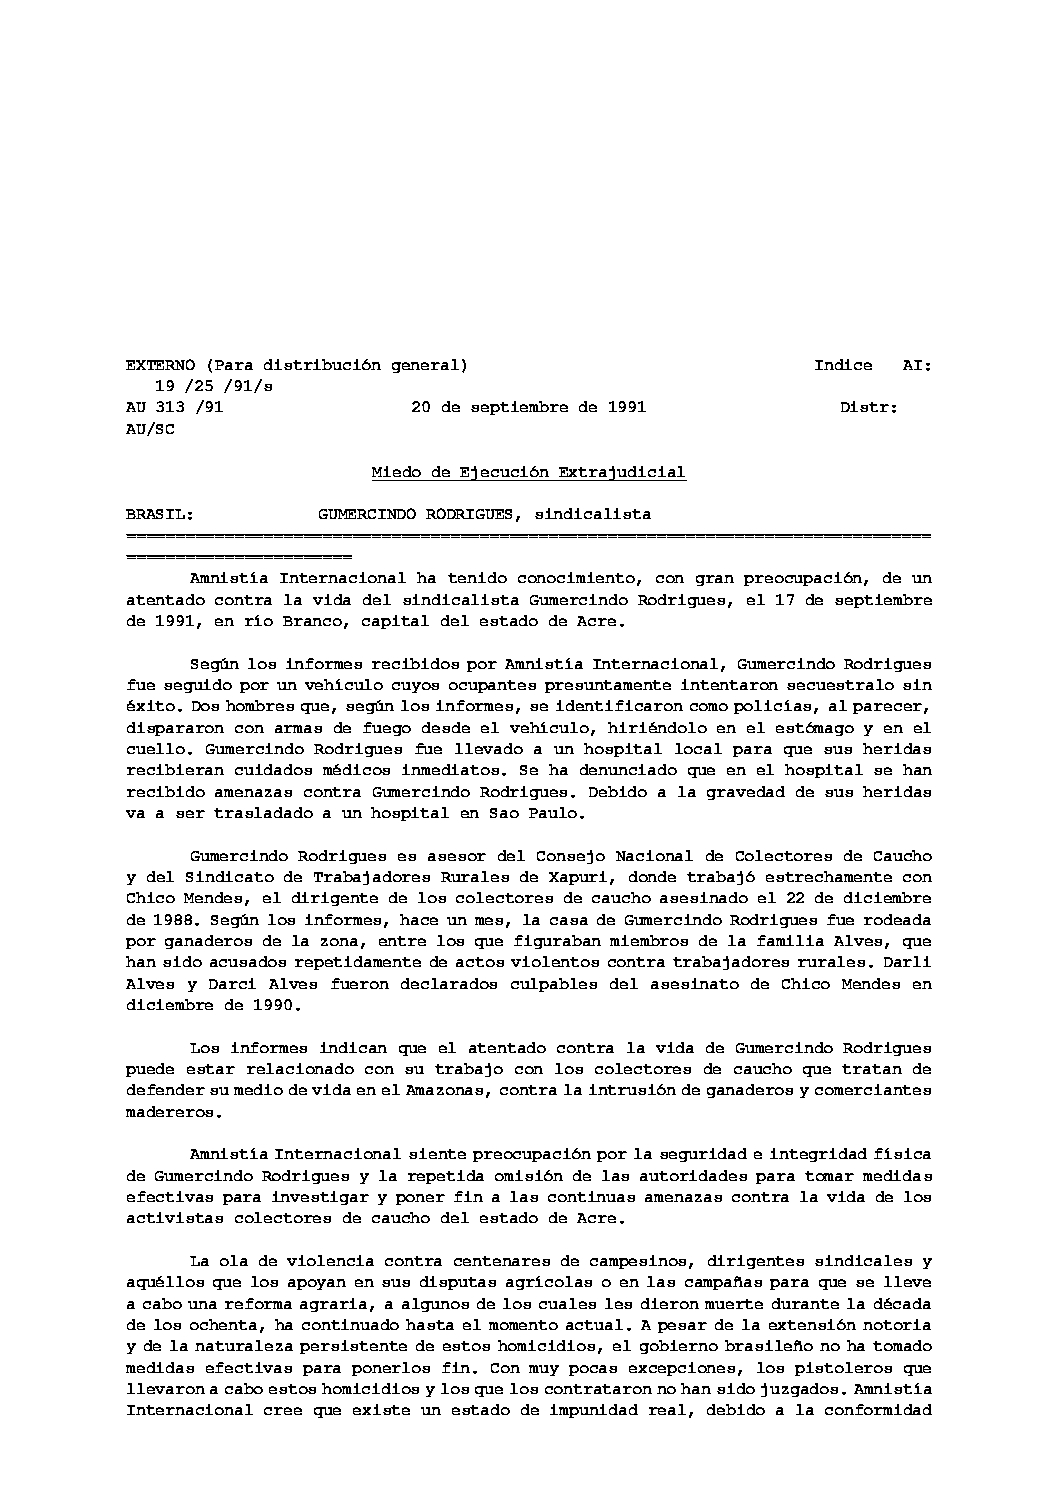 UA 313/91 - Brazil: fear of extrajudicial execution: Gumercindo Rodrigues -  Amnesty International